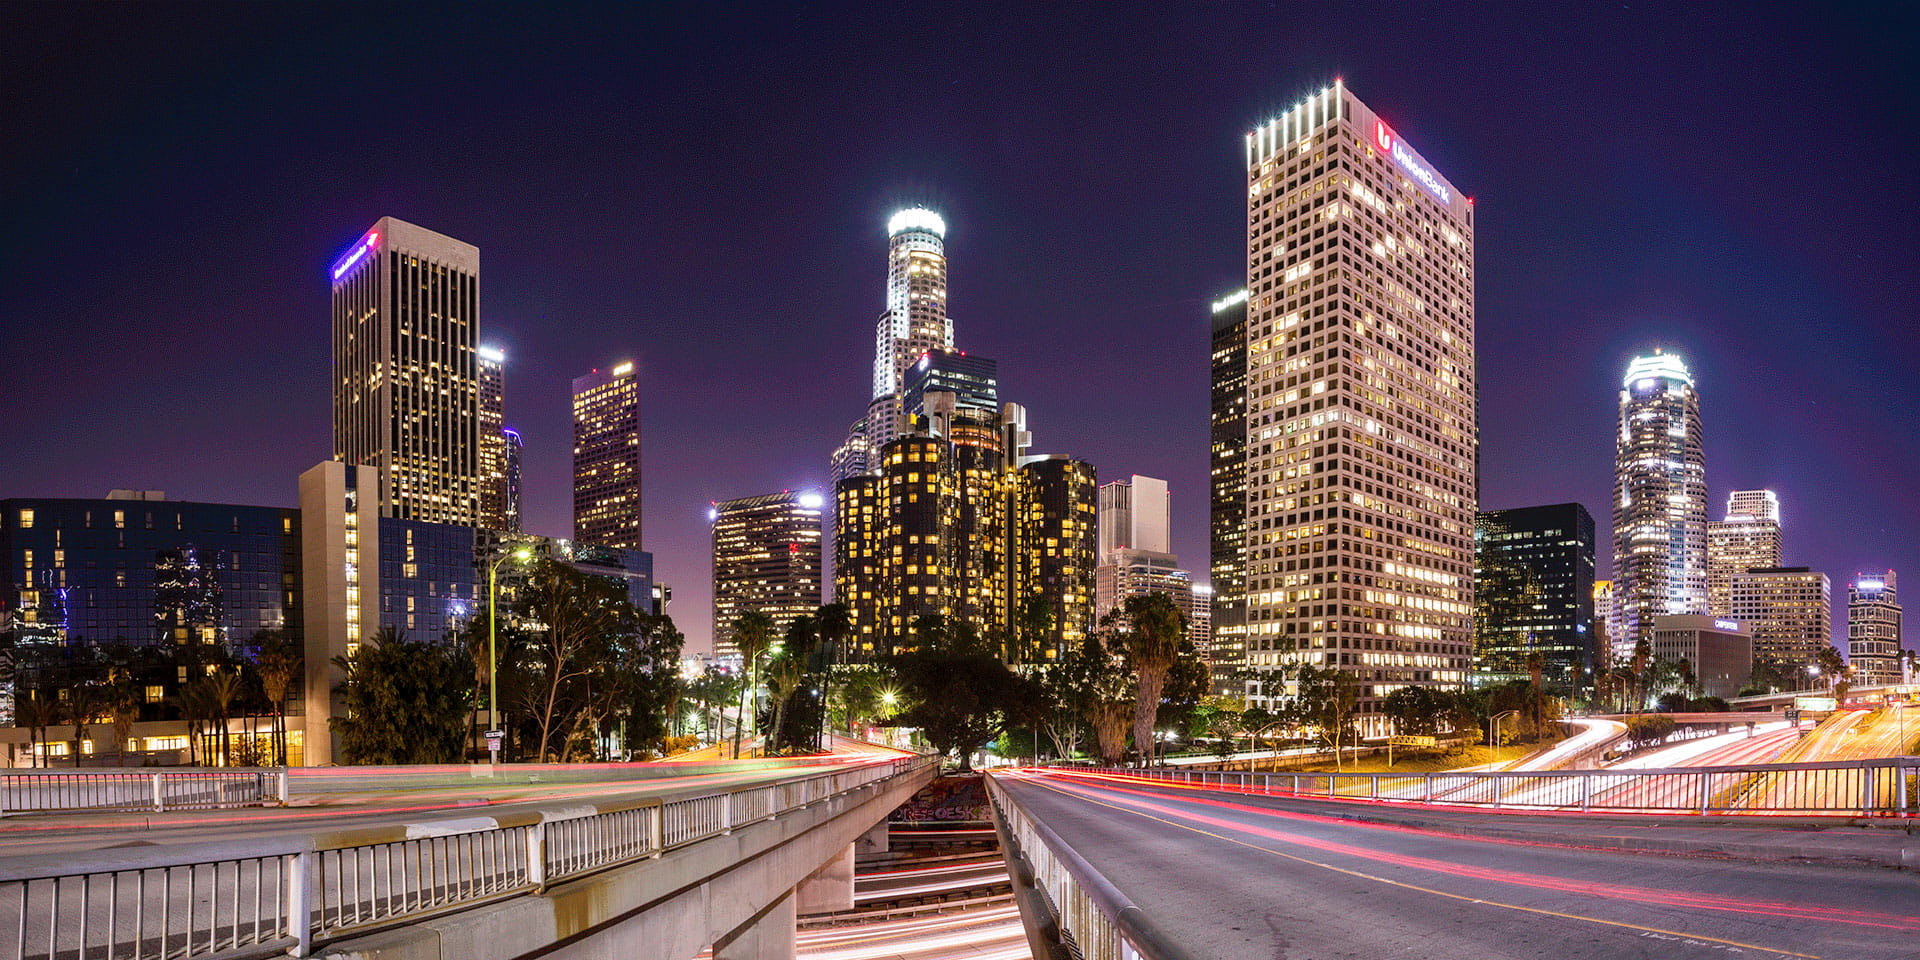 Los Angeles City at Night